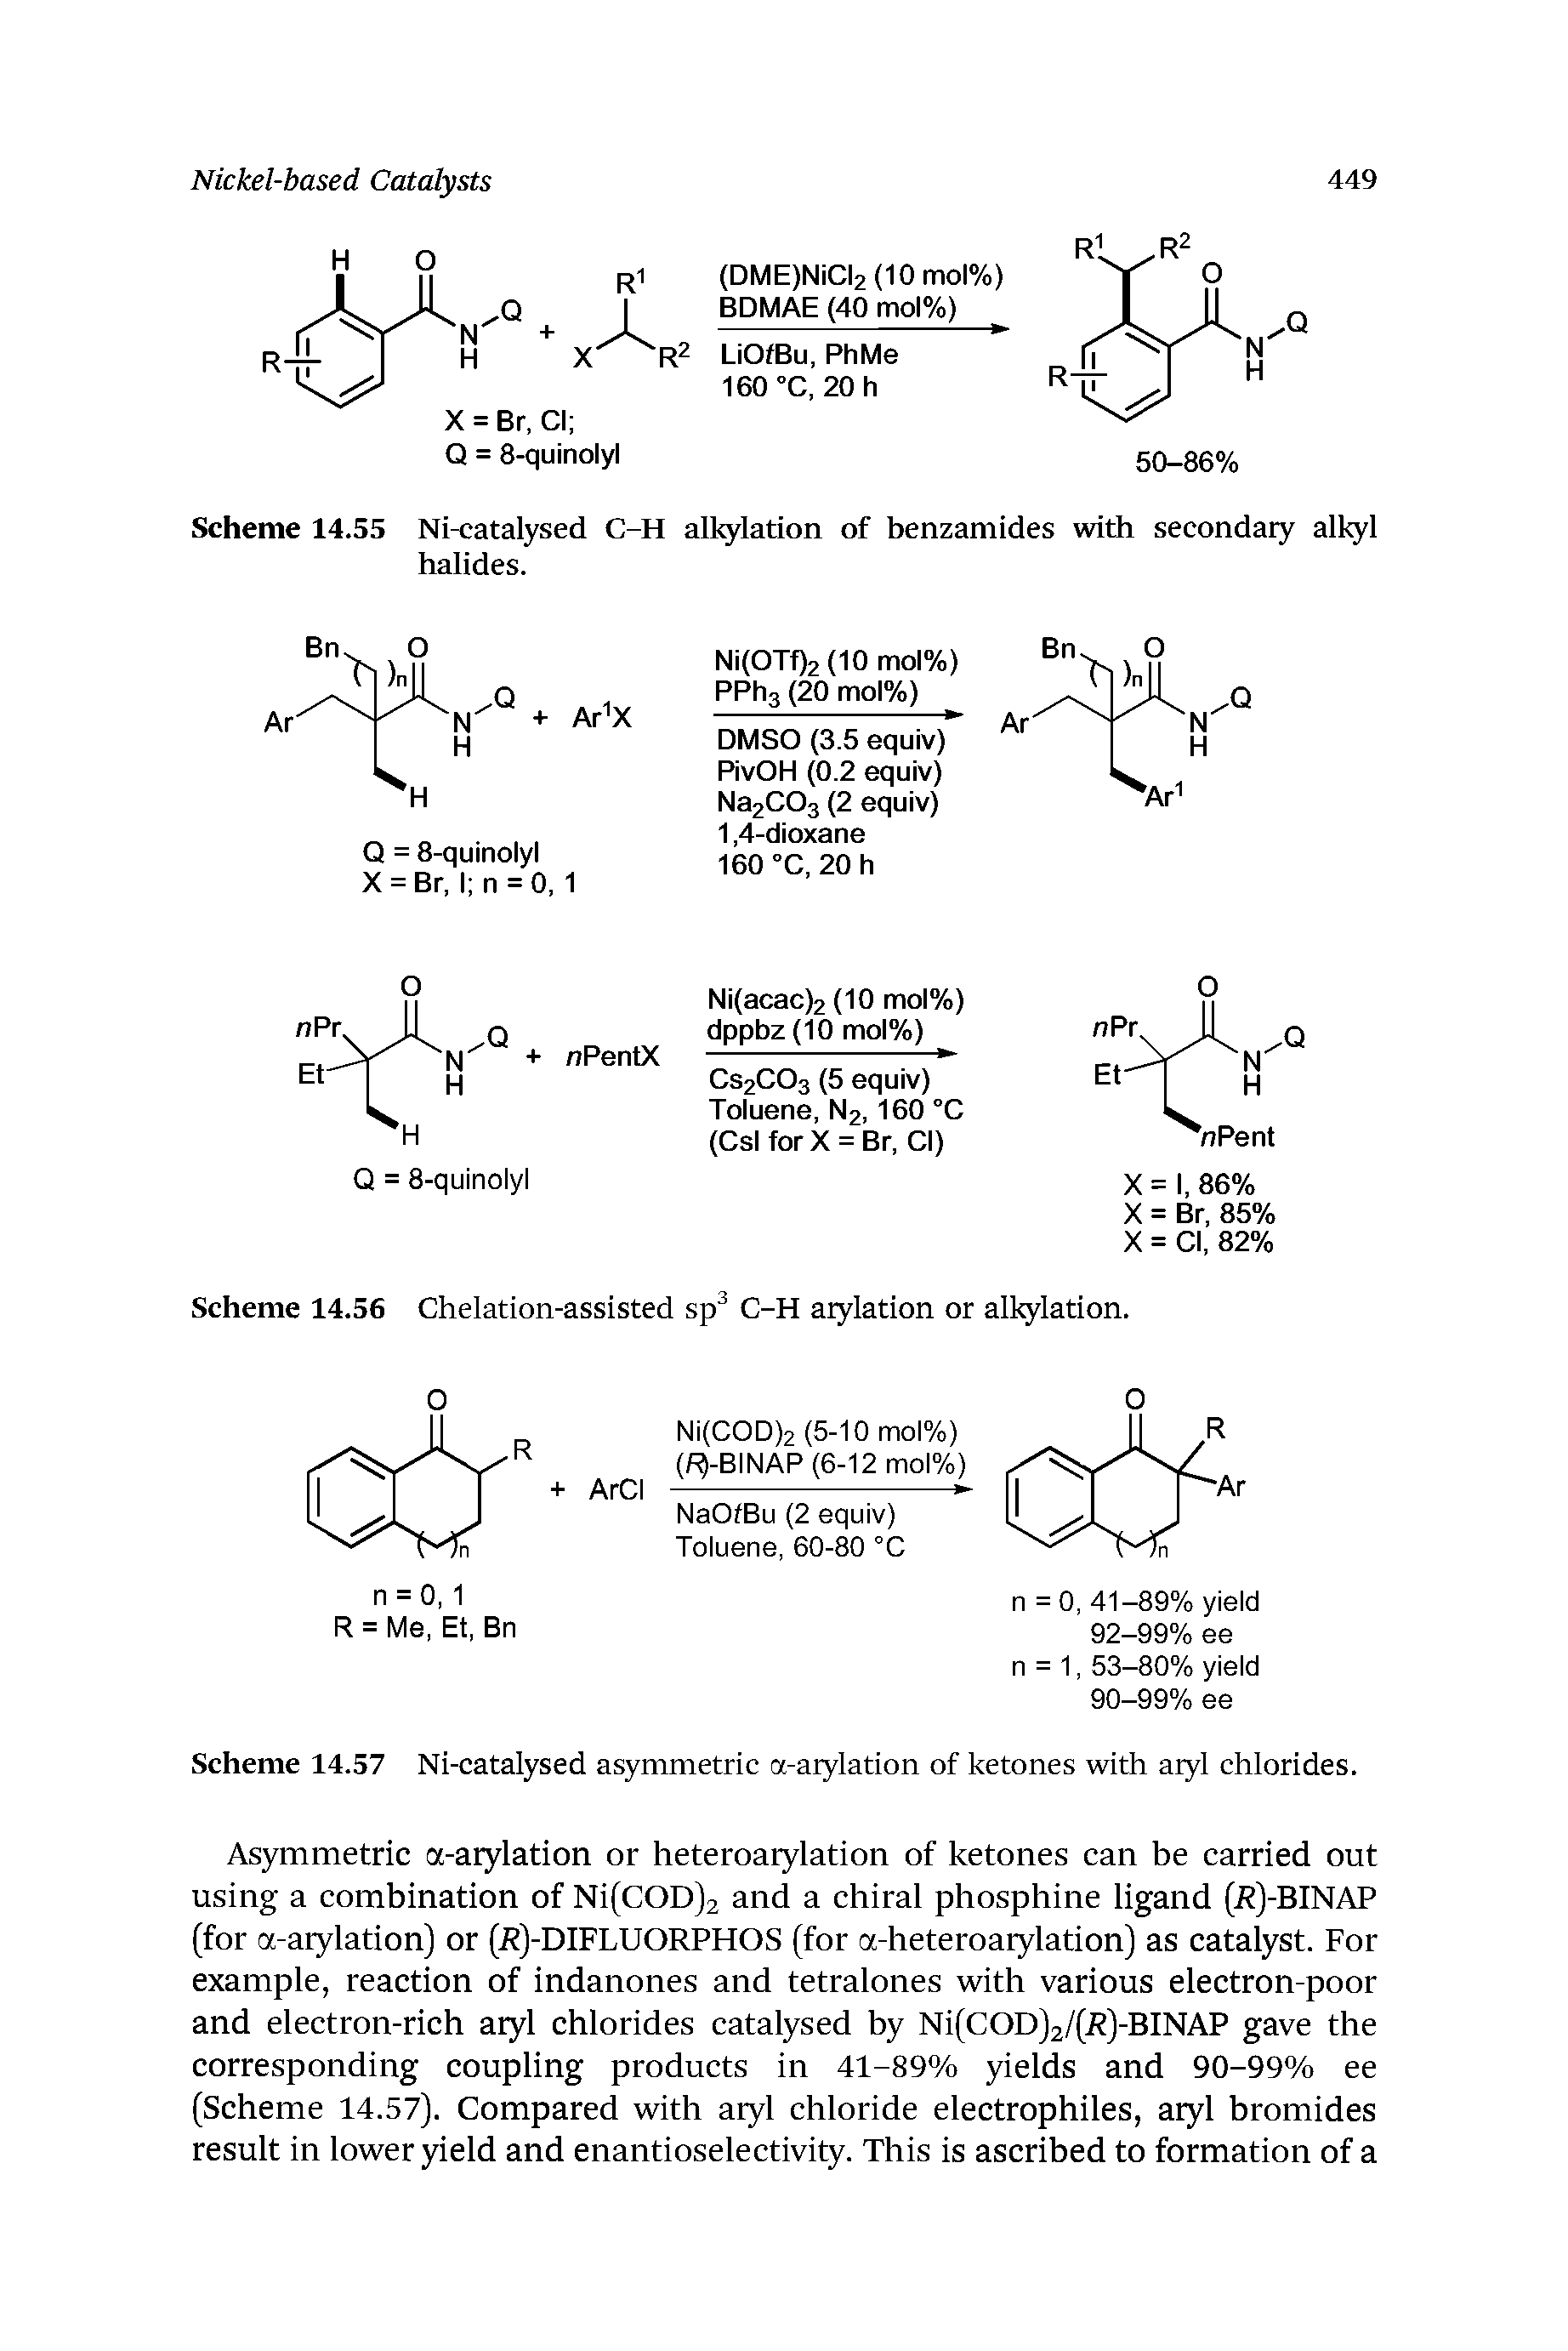 Scheme 14.57 Ni-catalysed asymmetric a-aiylation of ketones with aryl chlorides.